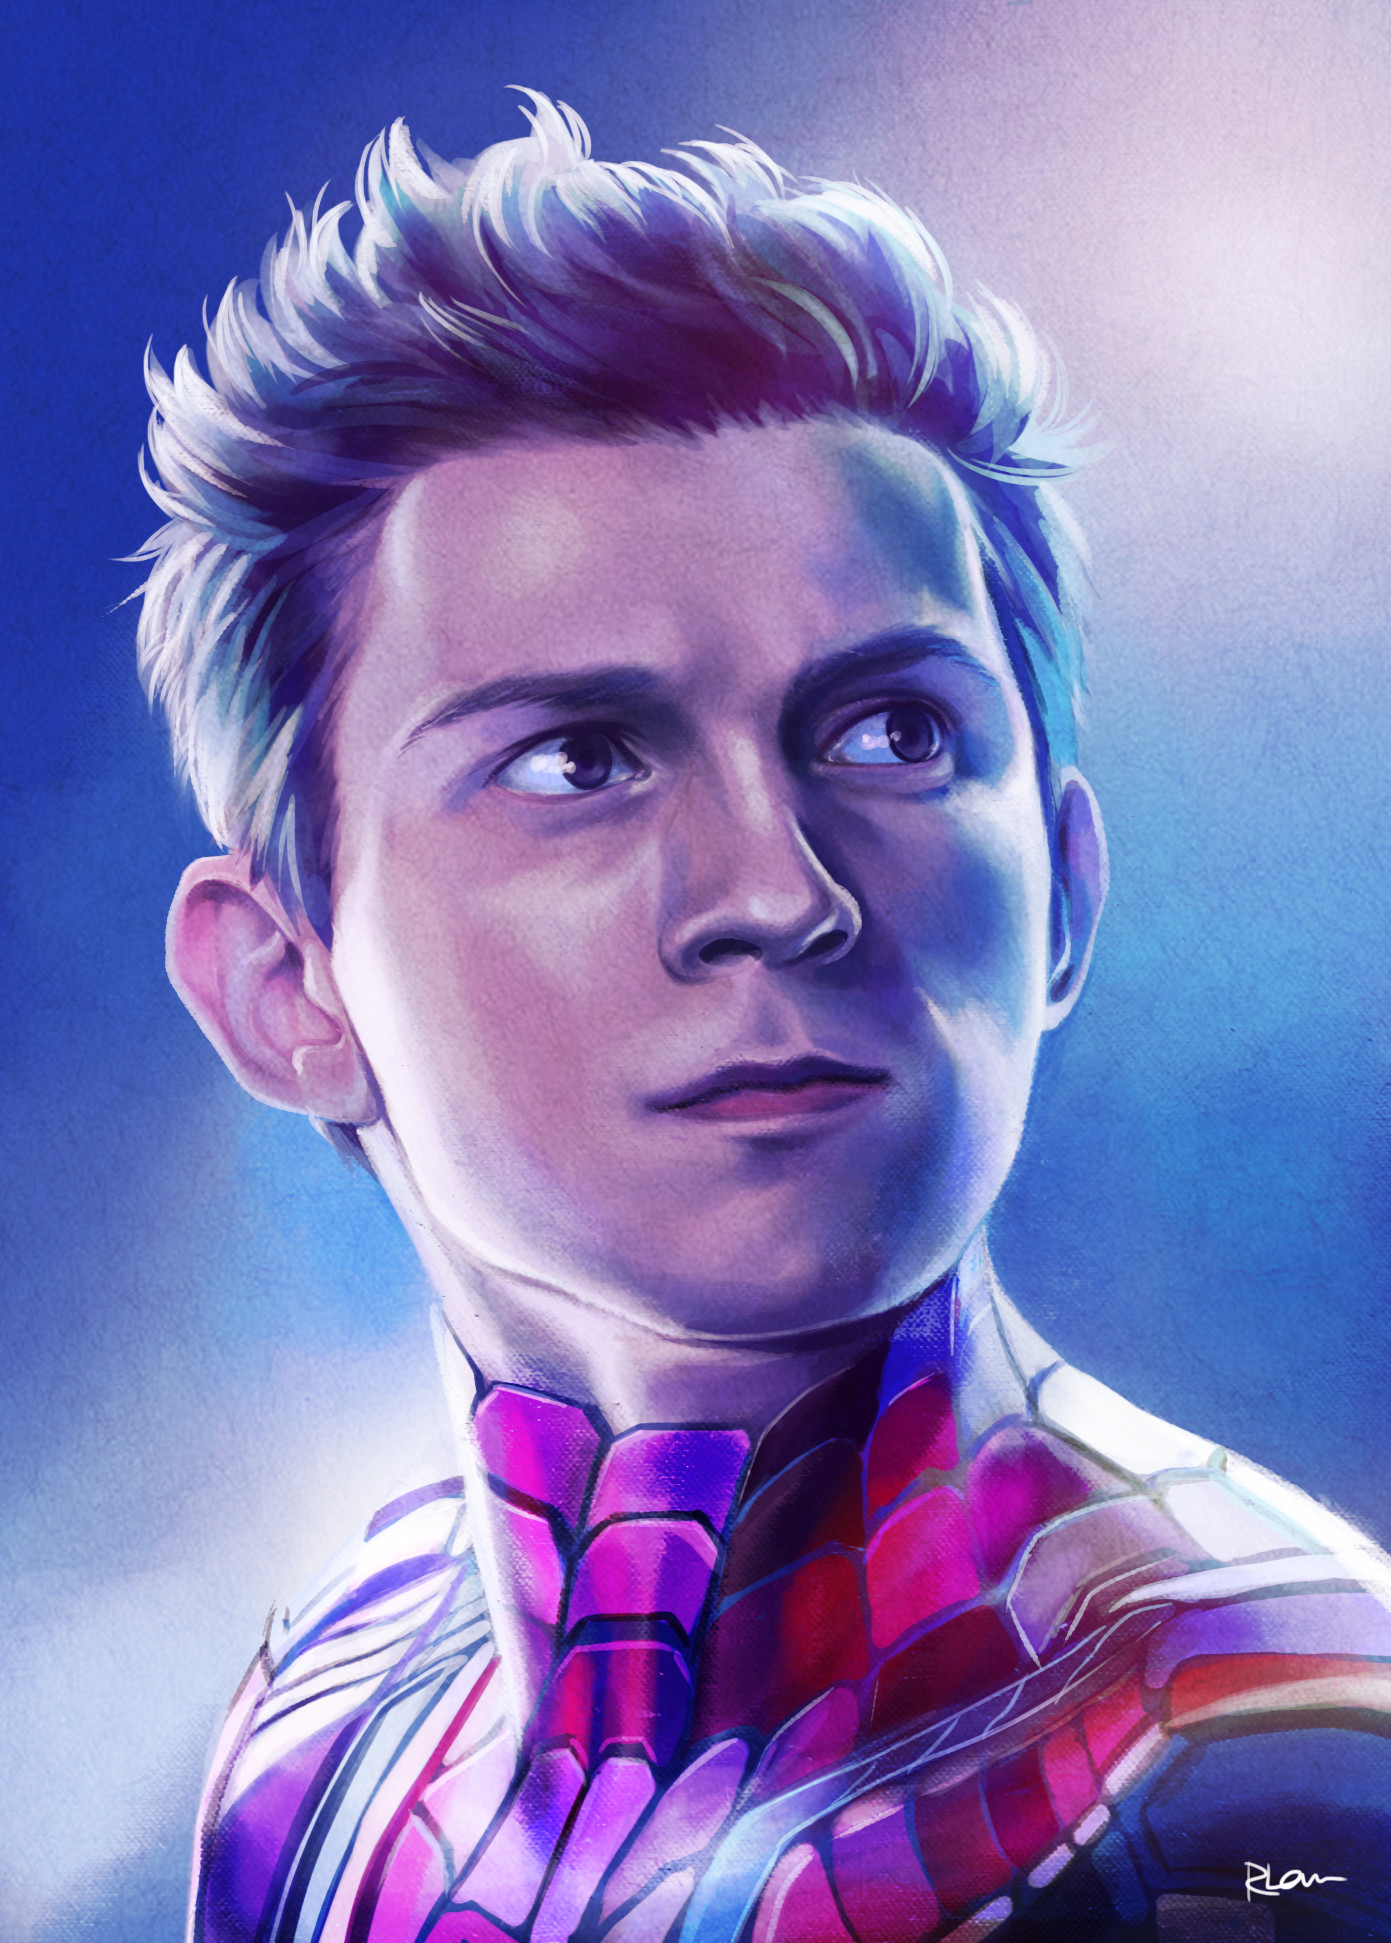 Spiderman self portrait